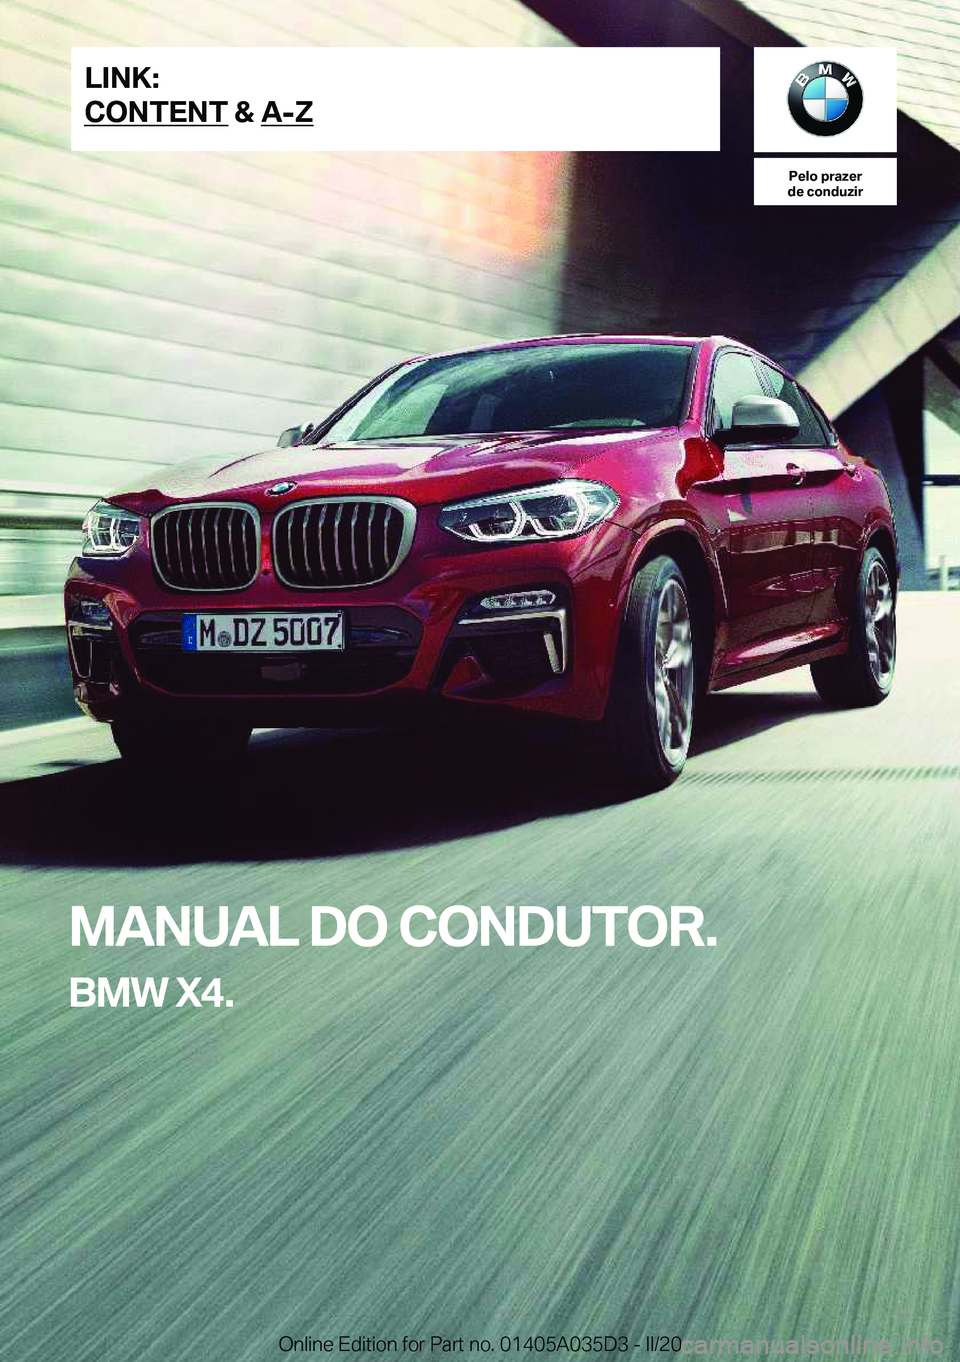 BMW X4 2020  Manual do condutor (in Portuguese) �P�e�l�o��p�r�a�z�e�r
�d�e��c�o�n�d�u�z�i�r
�M�A�N�U�A�L��D�O��C�O�N�D�U�T�O�R�.
�B�M�W��X�4�.�L�I�N�K�:
�C�O�N�T�E�N�T��&��A�-�Z�O�n�l�i�n�e��E�d�i�t�i�o�n��f�o�r��P�a�r�t��n�o�.��0�1�4�0